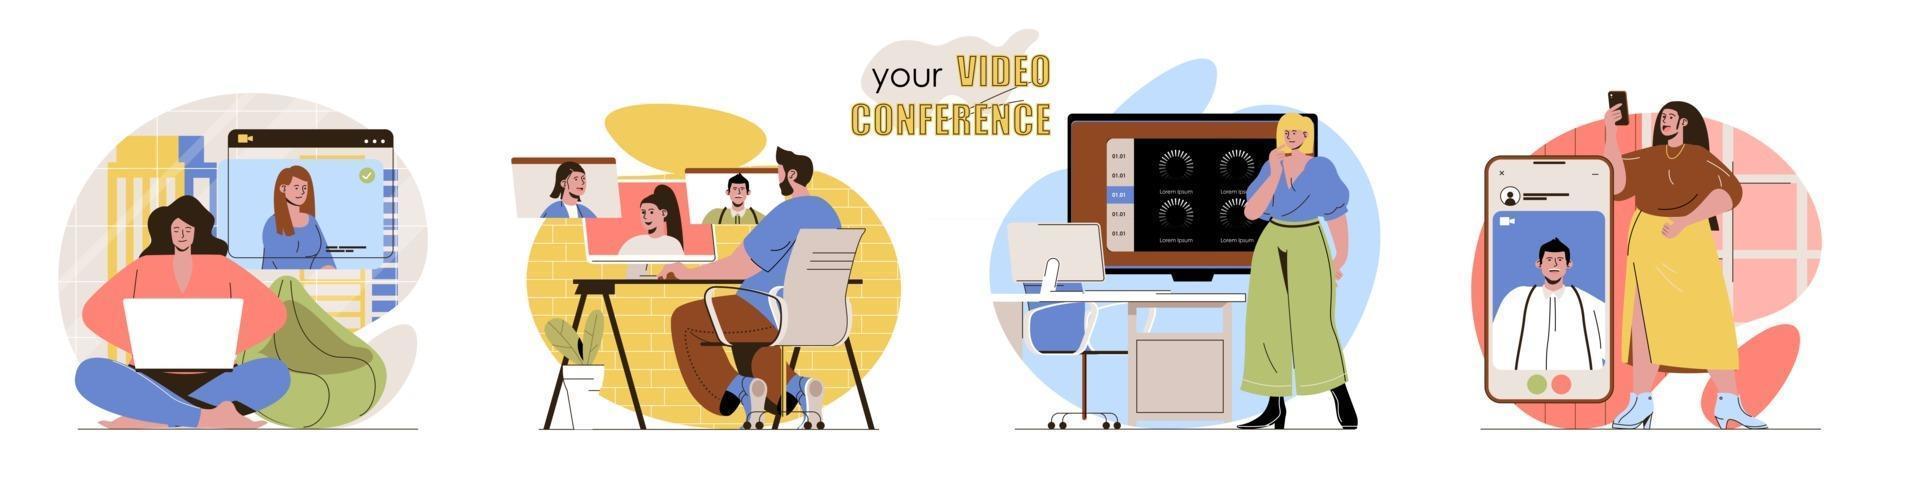 Video conference concept scenes set vector